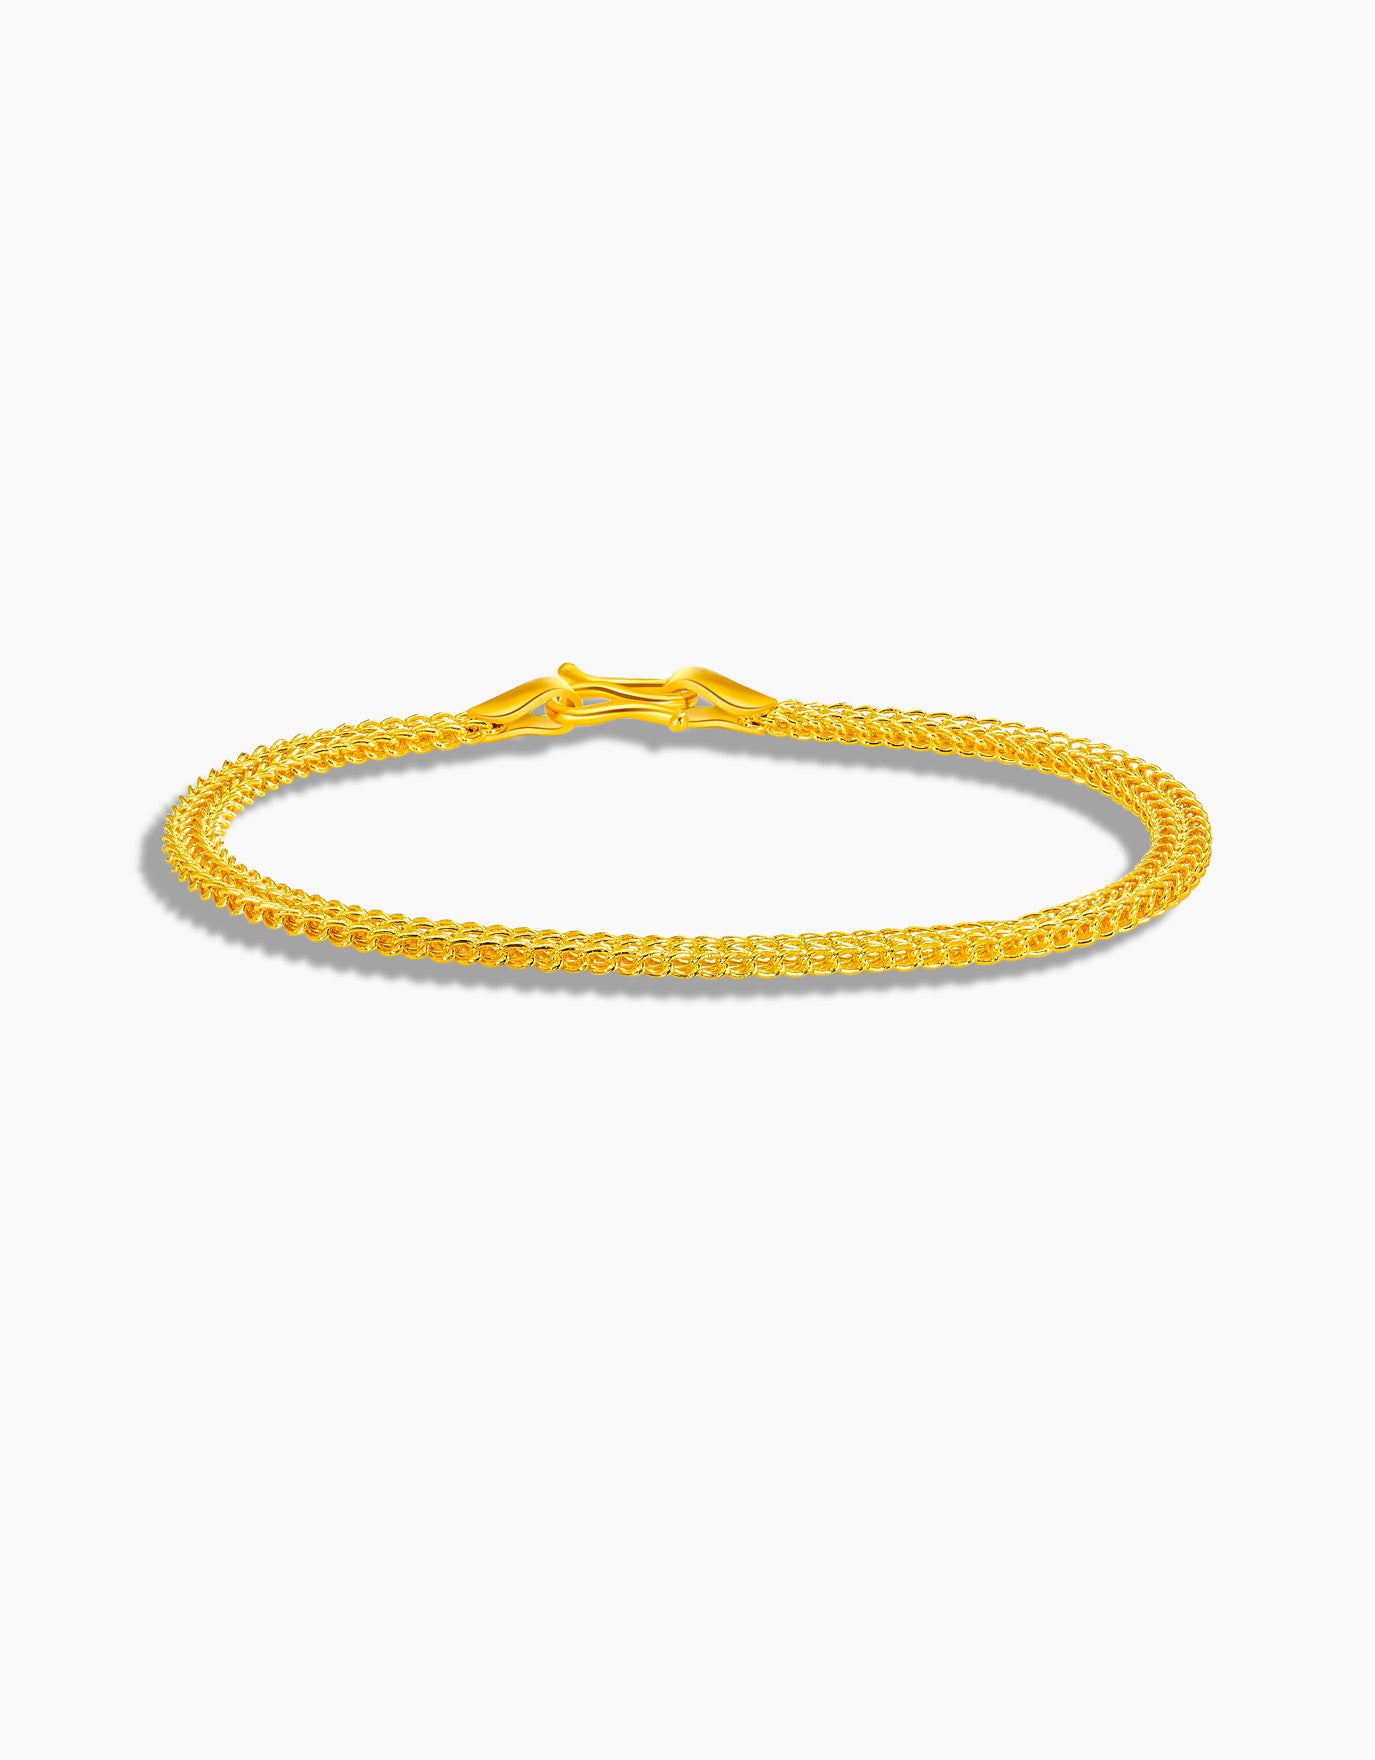 LVC 9IN Chain 999 Gold Bracelet